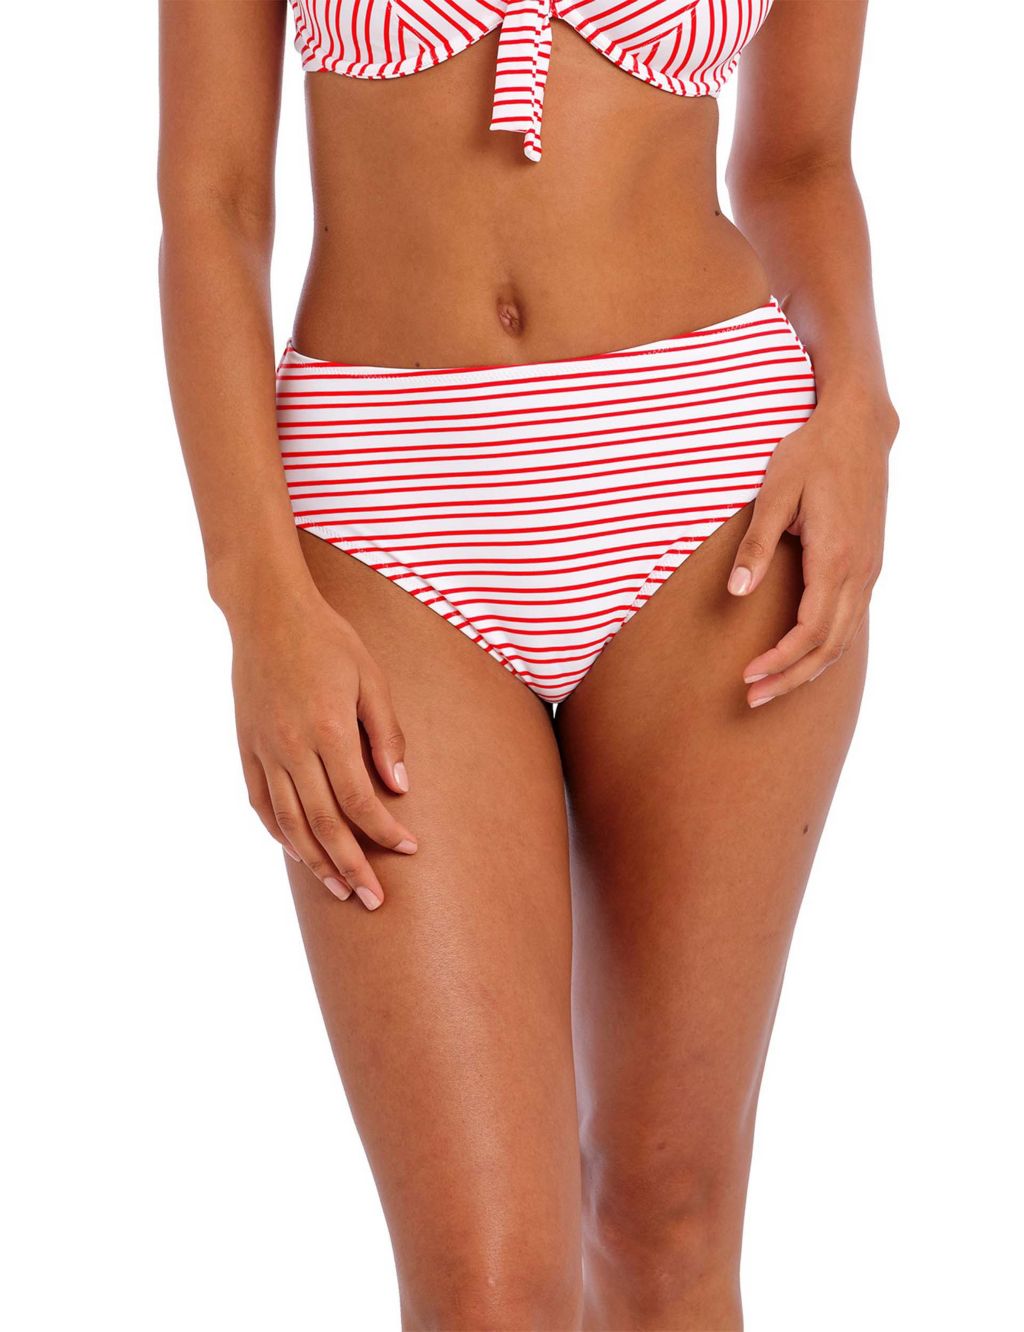 New Shores Striped Bikini Bottoms image 1